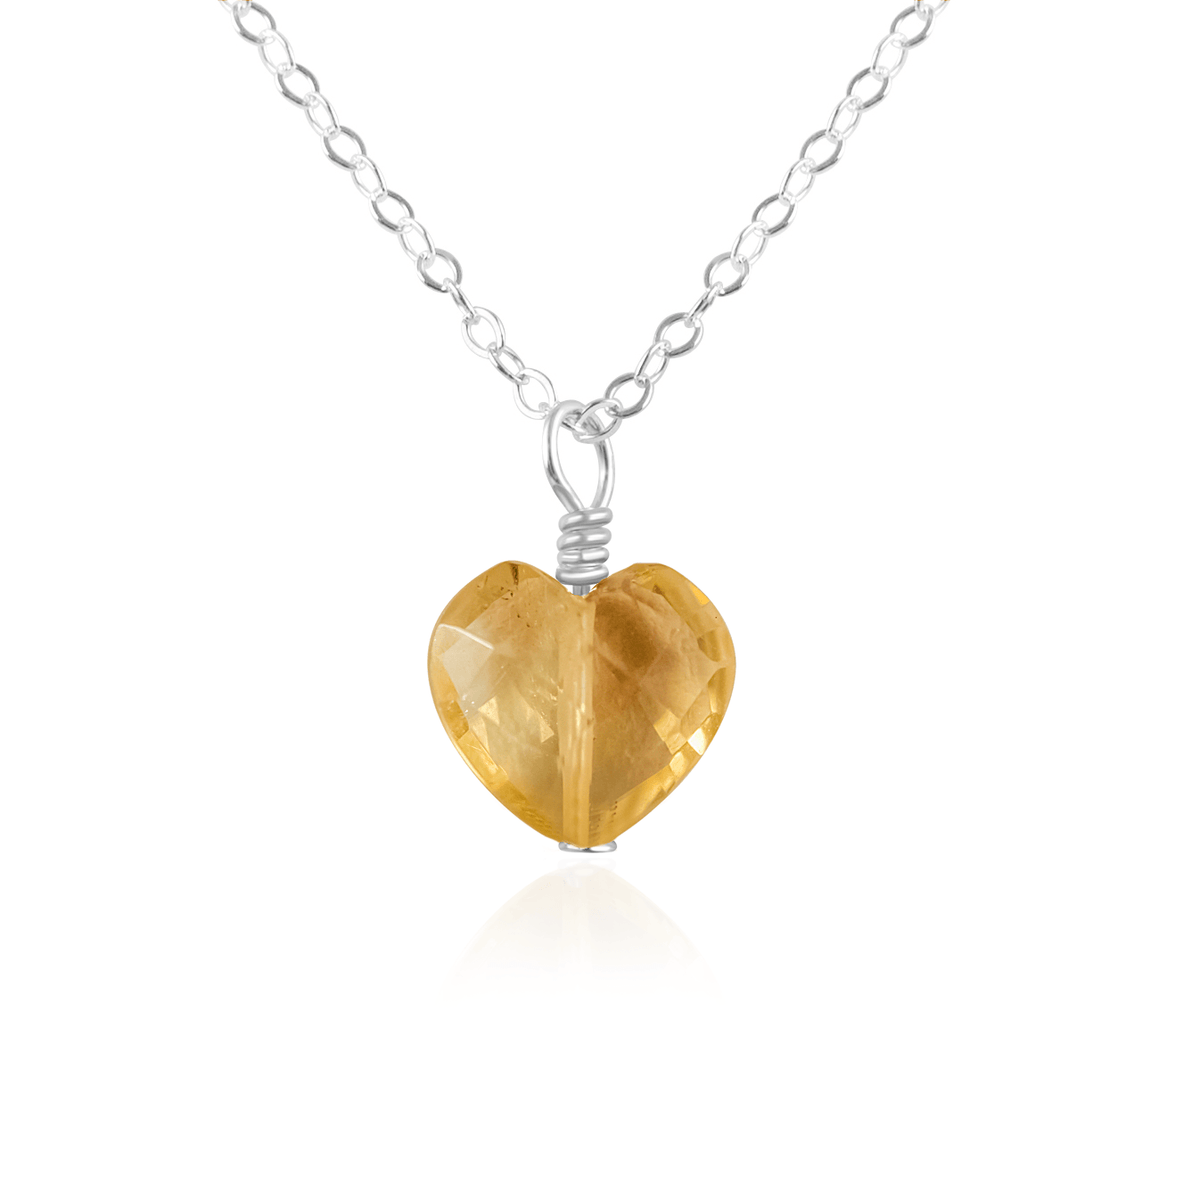 Citrine Crystal Heart Pendant Necklace - Citrine Crystal Heart Pendant Necklace - Sterling Silver / Cable - Luna Tide Handmade Crystal Jewellery